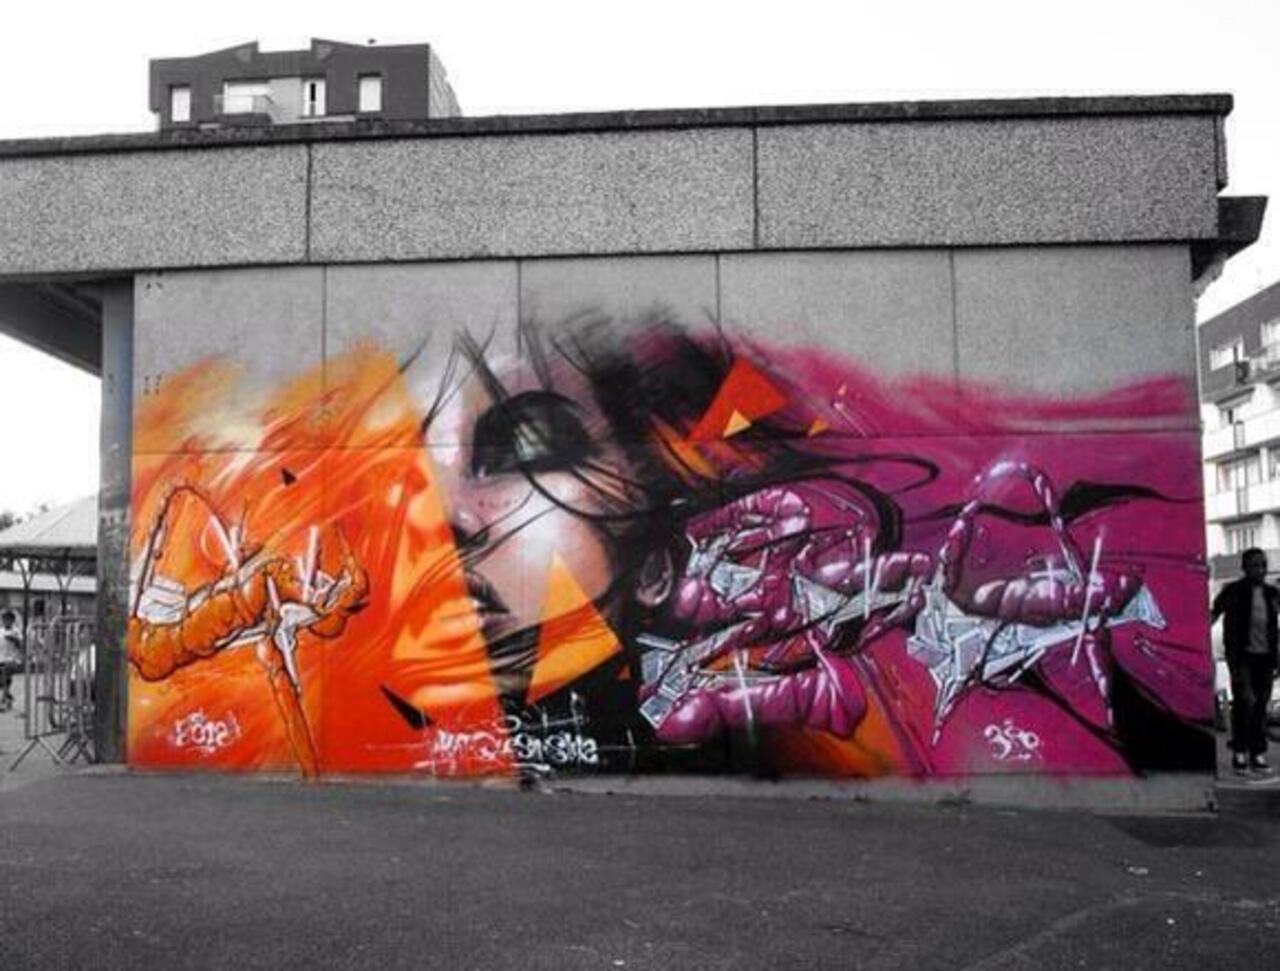 Colab of Sly2, Kat, Quesa Street Art wall in Paris, France #art #mural #graffiti #streetart http://t.co/y2QYWVPYfi